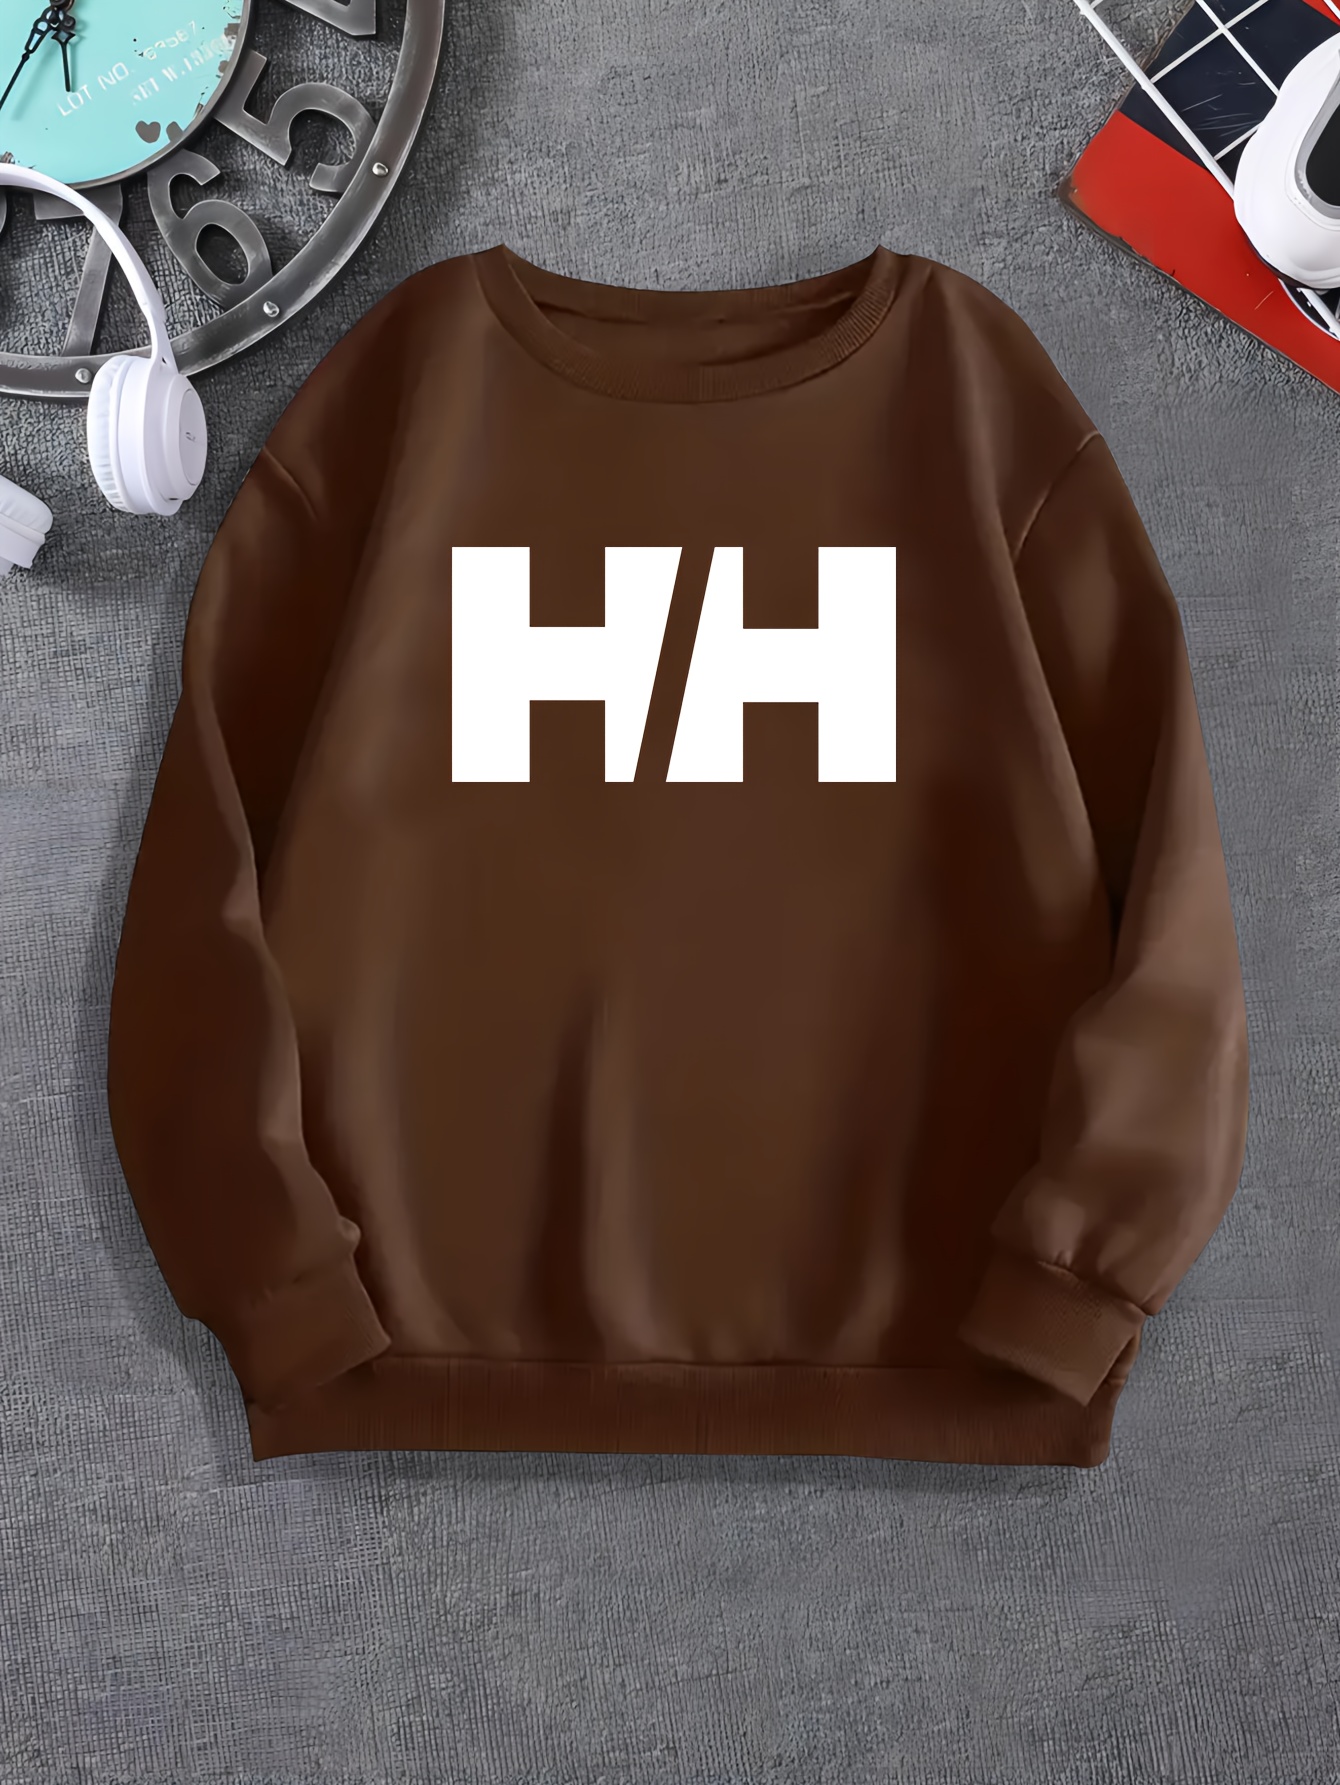 Sudadera HH Hombre Logo